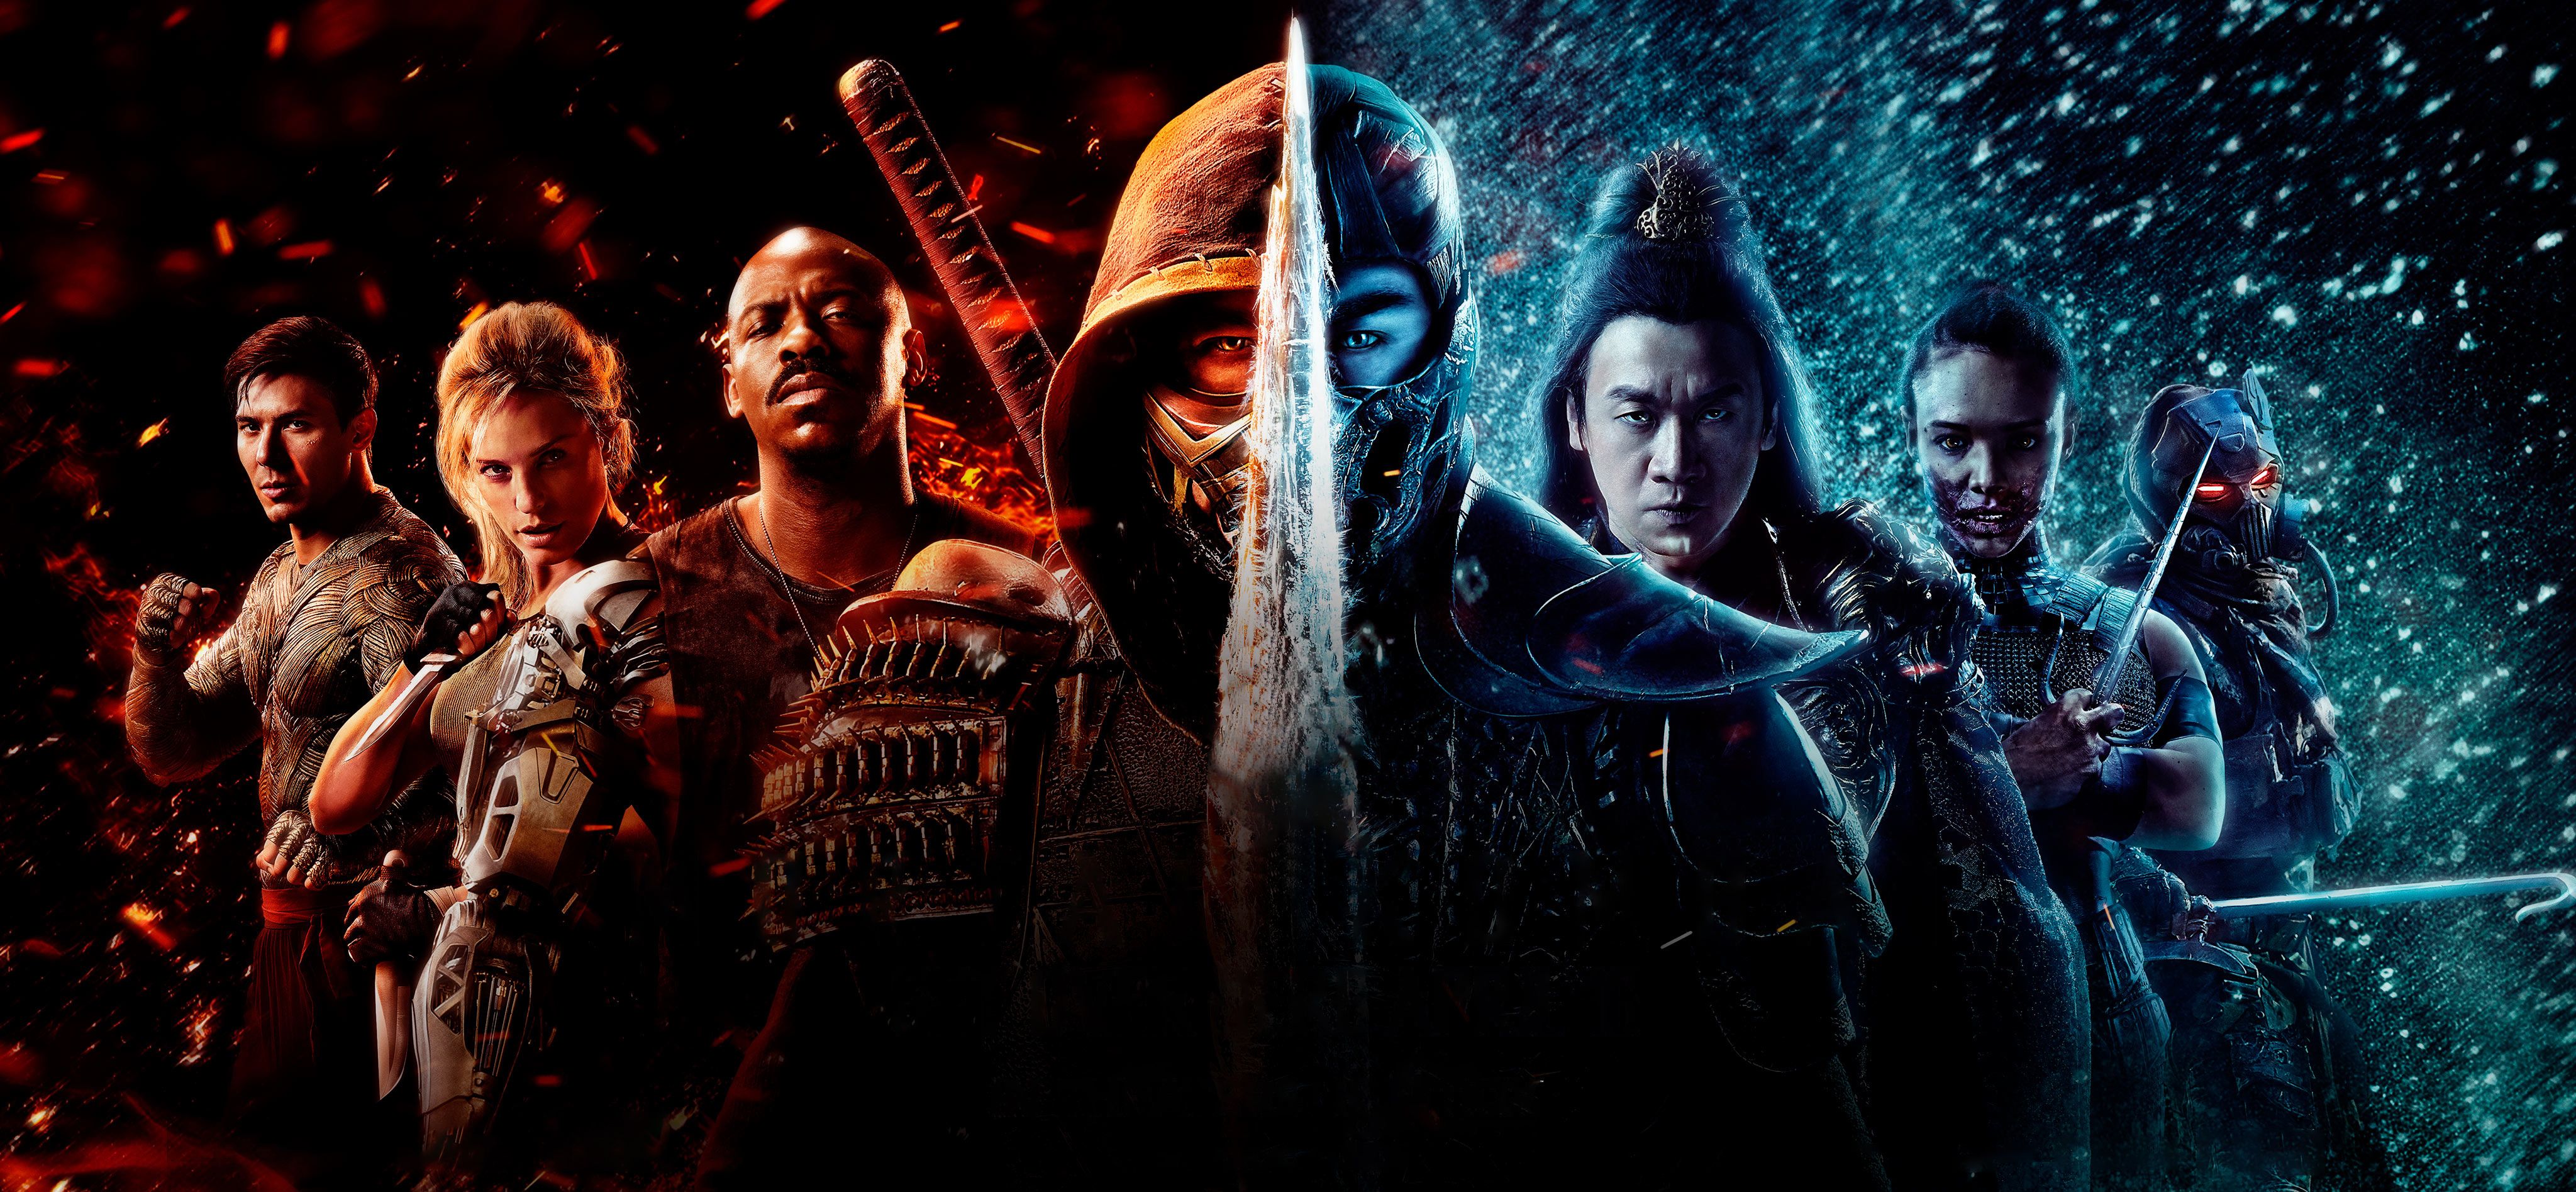 Mortal Kombat 4K Wallpaper, 2021 Movies, Poster, Movies